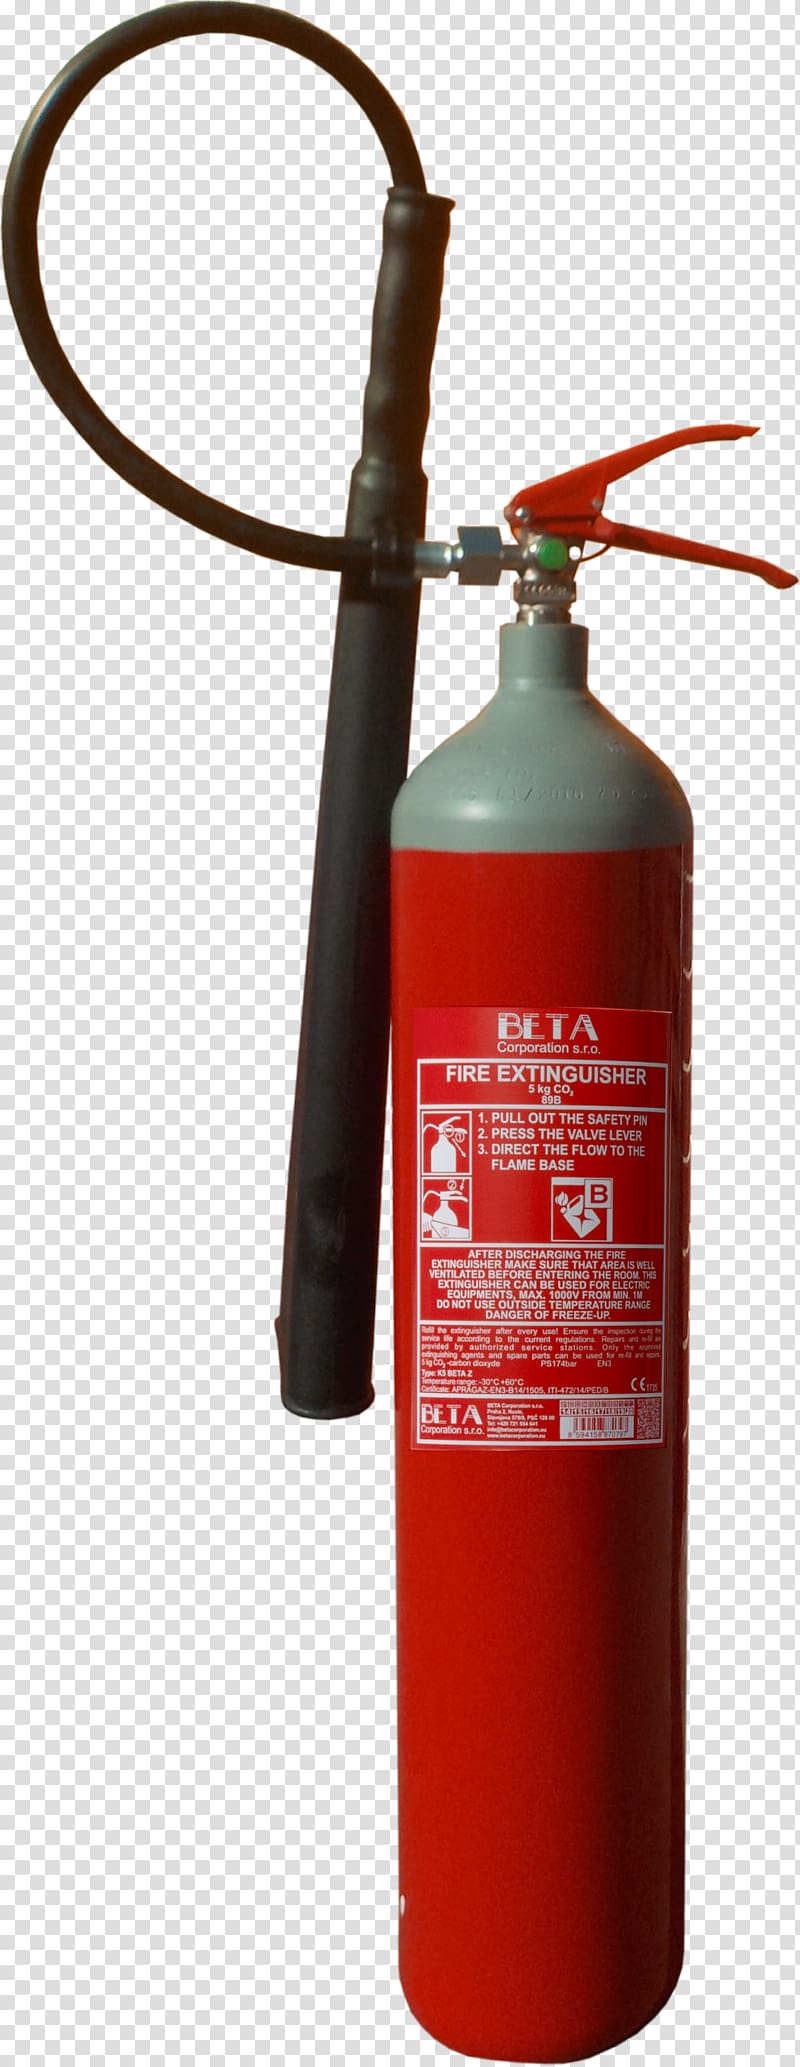 Fire Extinguishers Cylinder Carbon dioxide, fire extinguisher material transparent background PNG clipart